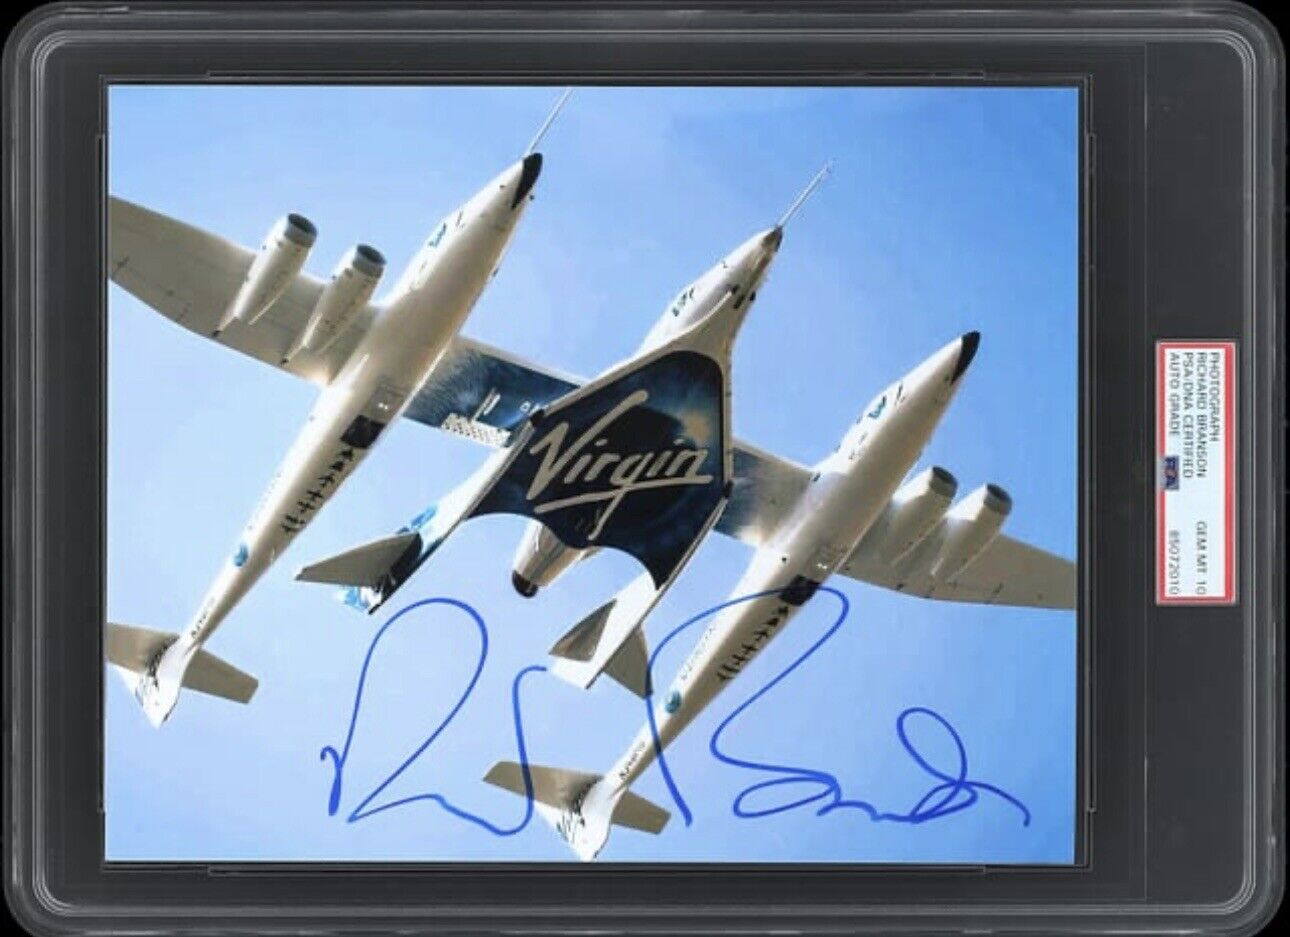 Richard Branson Signed Photograph - 8 x 10 - PSA/DNA GEM MT 10 Virgin Airlines